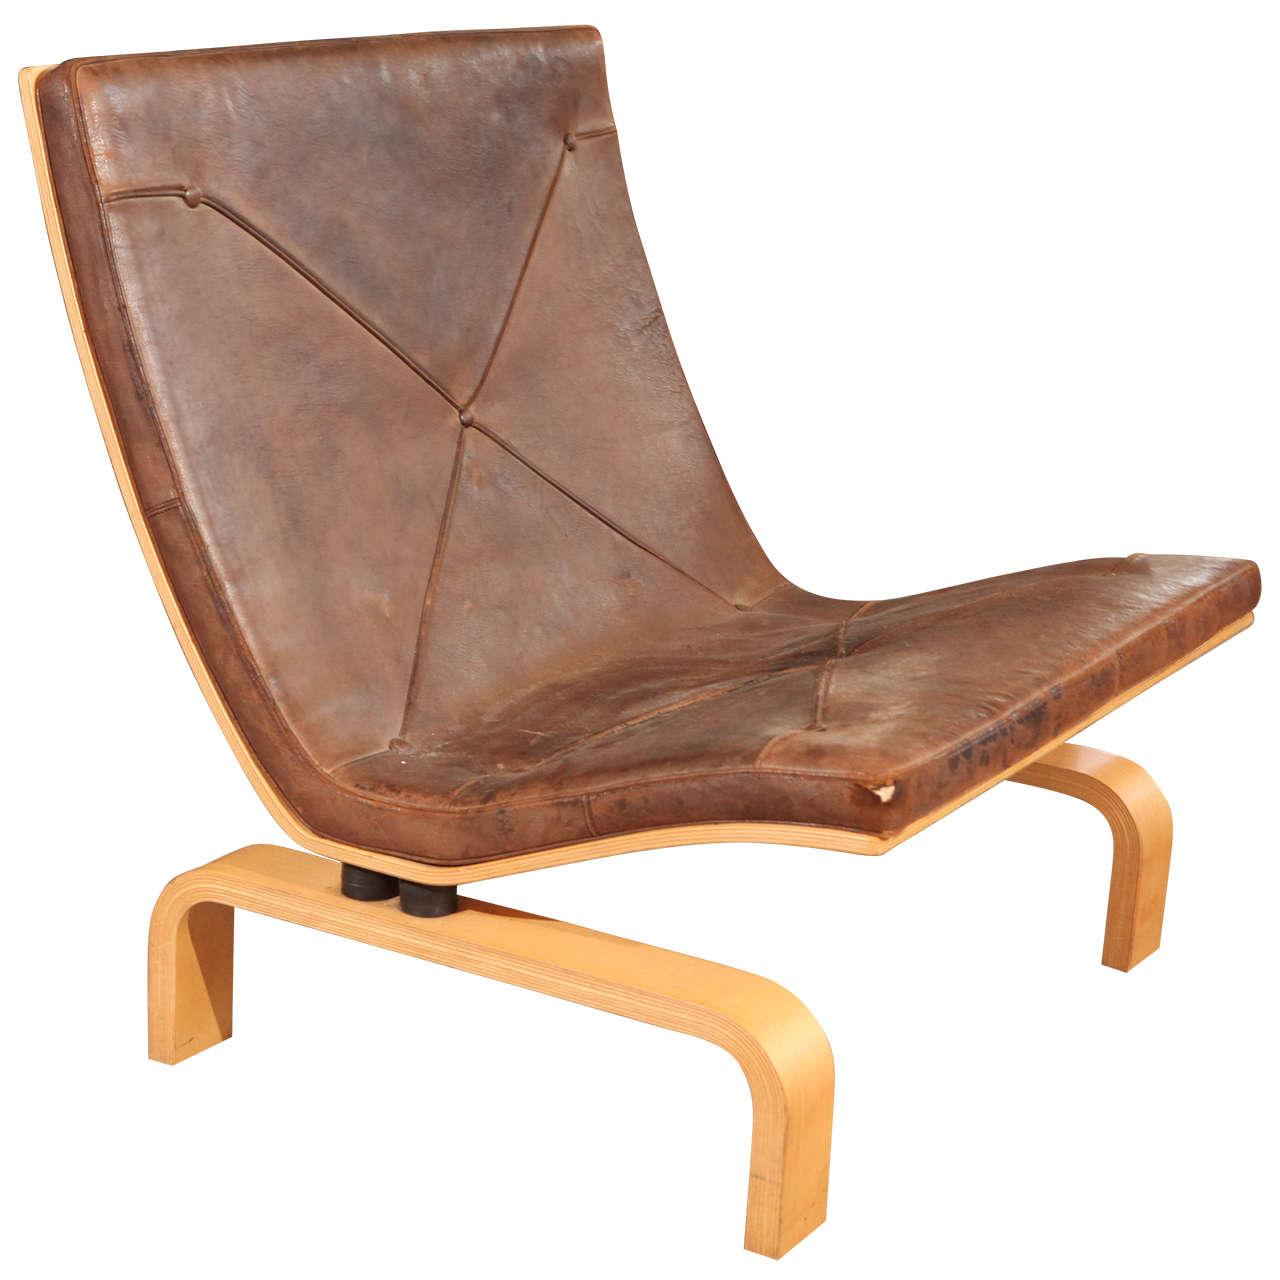 Poul Kjaerholm & E Kold Christensen 'PK27' Leather Chair For Sale